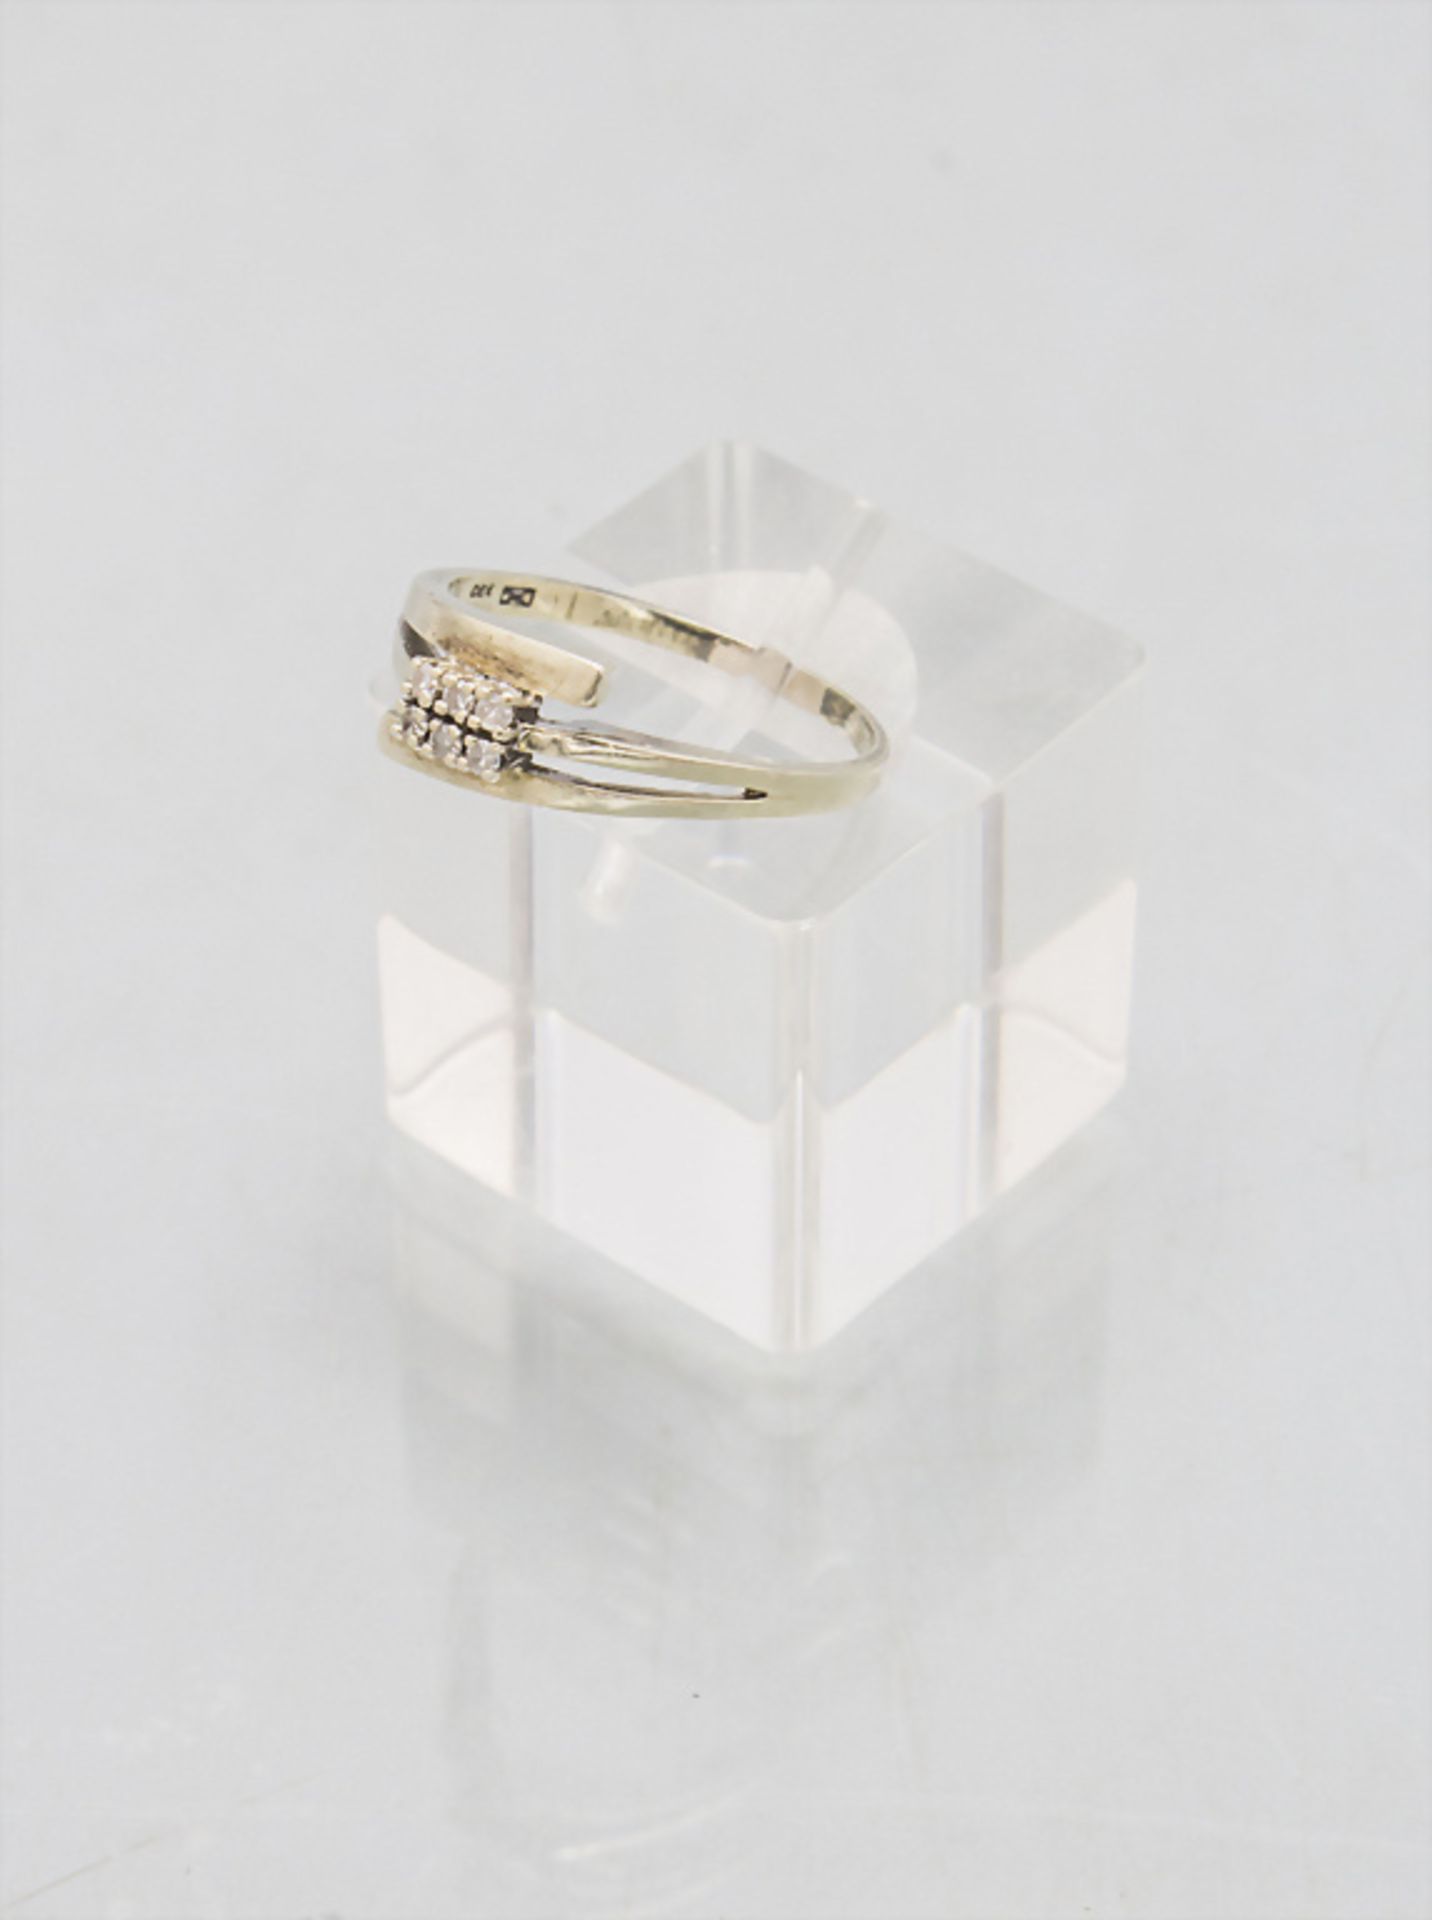 Damenring mit Diamanten / A ladies 8 ct gold ring with diamonds - Image 4 of 4